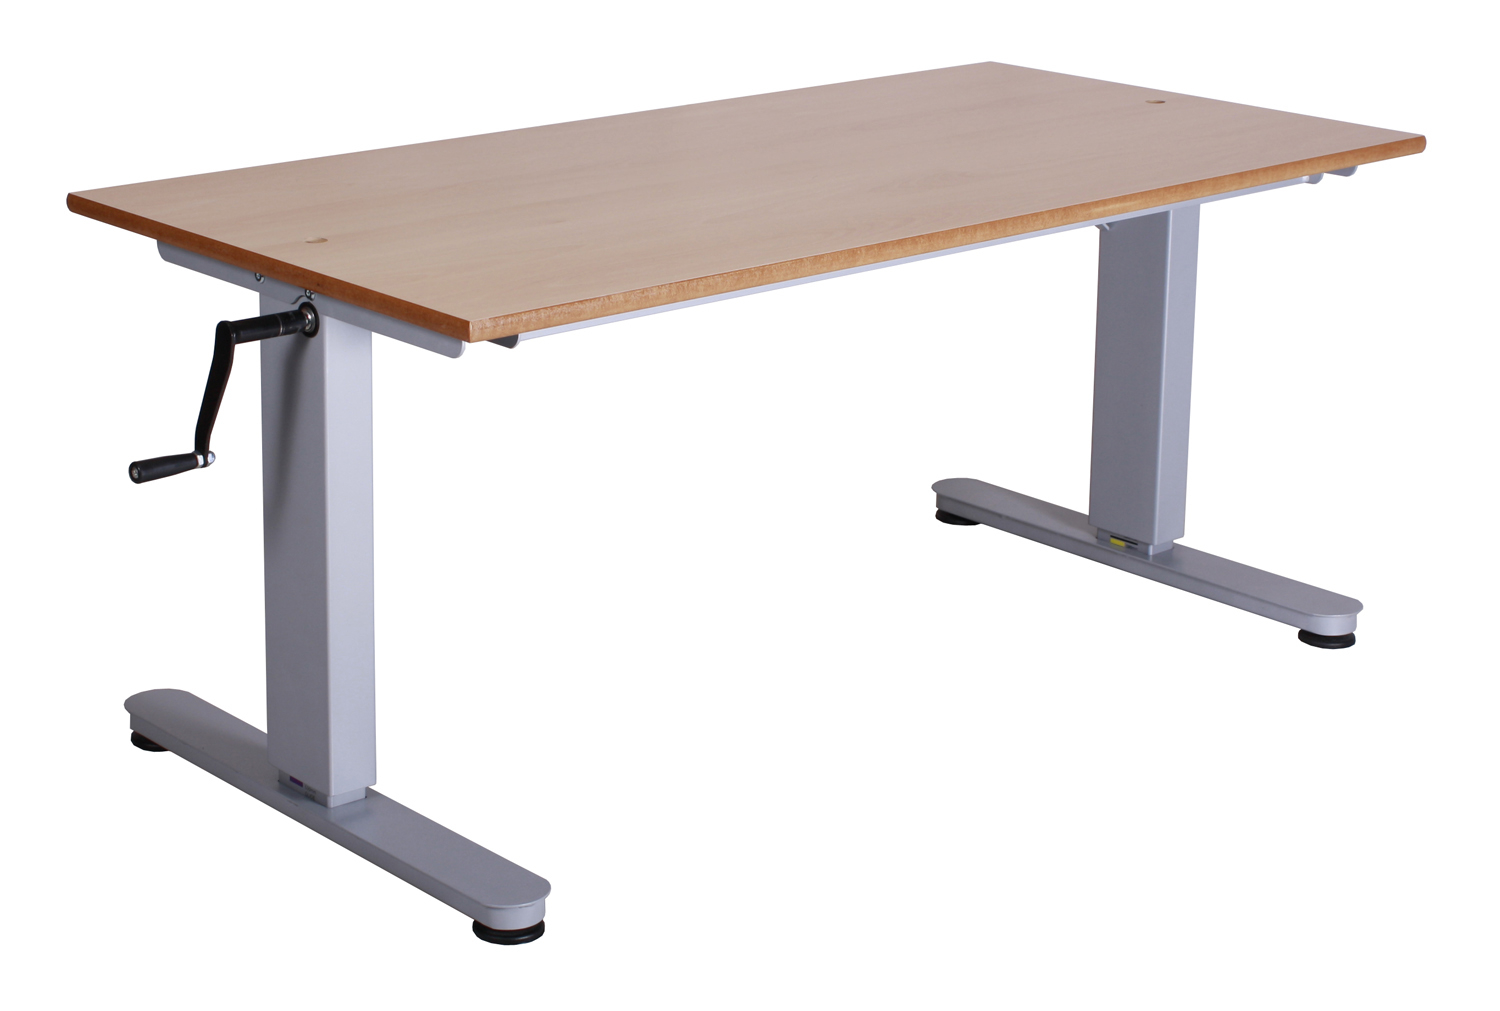 Qty 4 - Educate Crank Height Adjus Classroom Table Desk (MDF Edge), 80cm, Light Grey